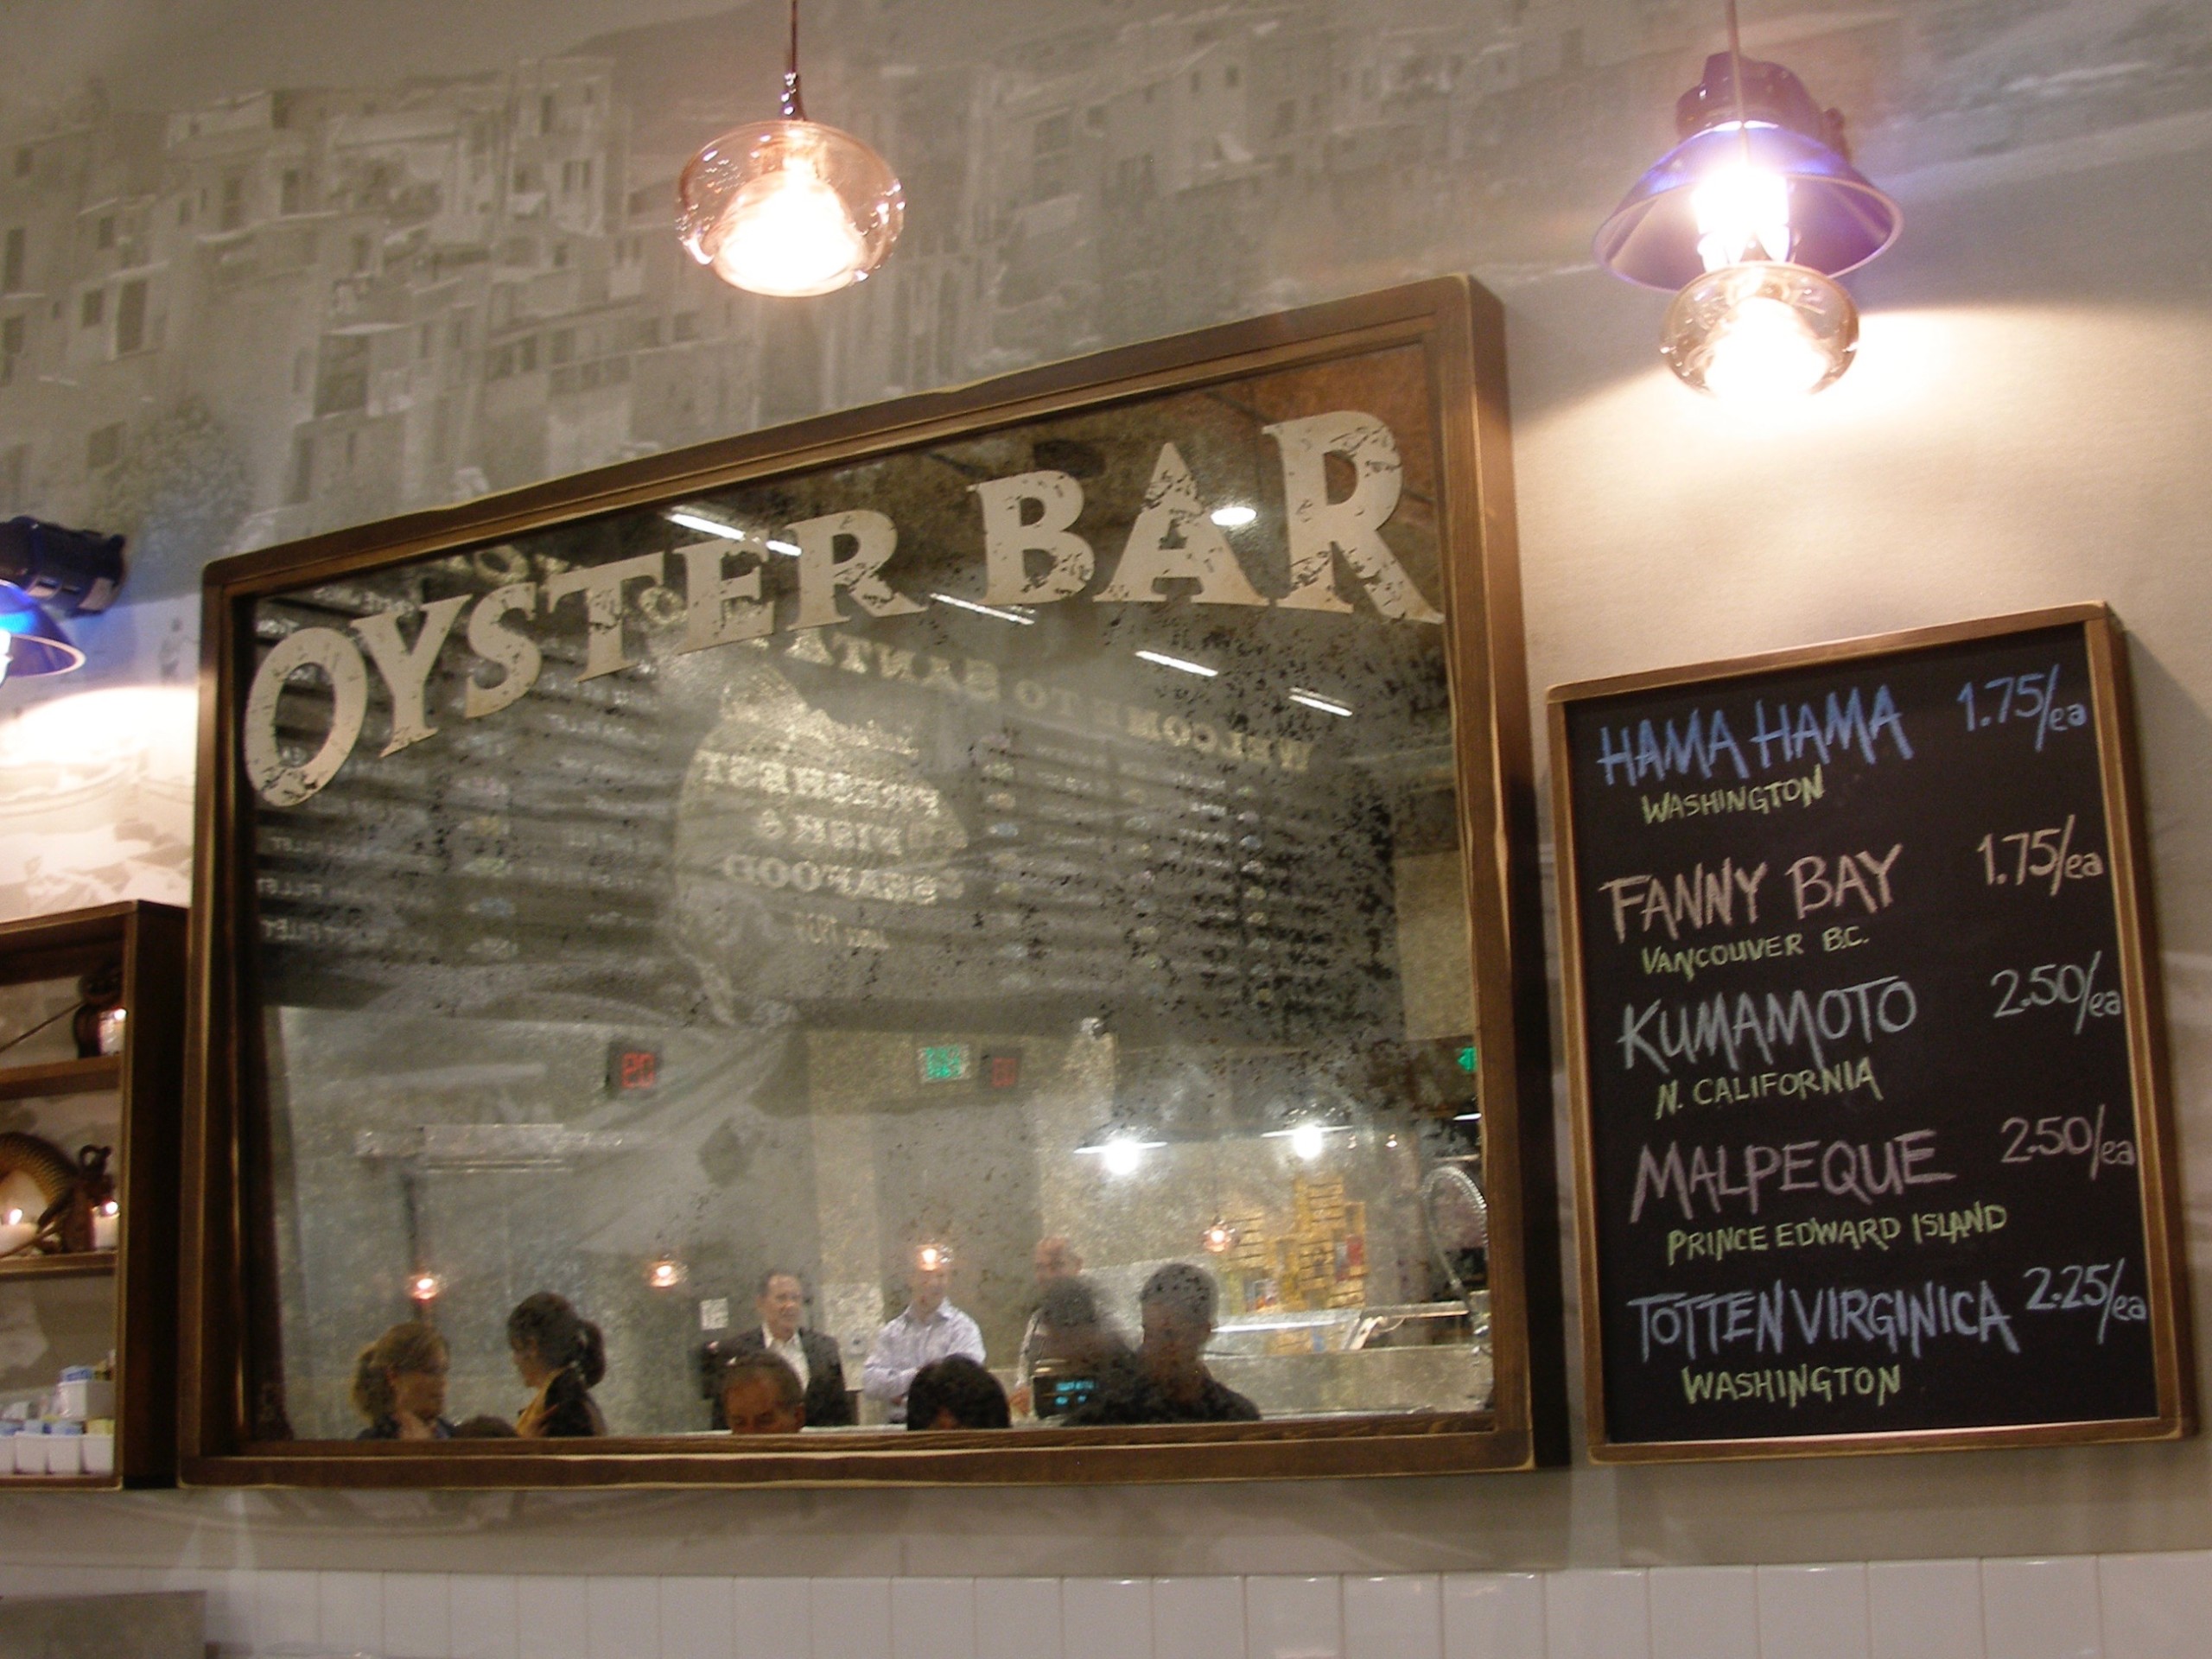 Oyster Bar Los Angeles